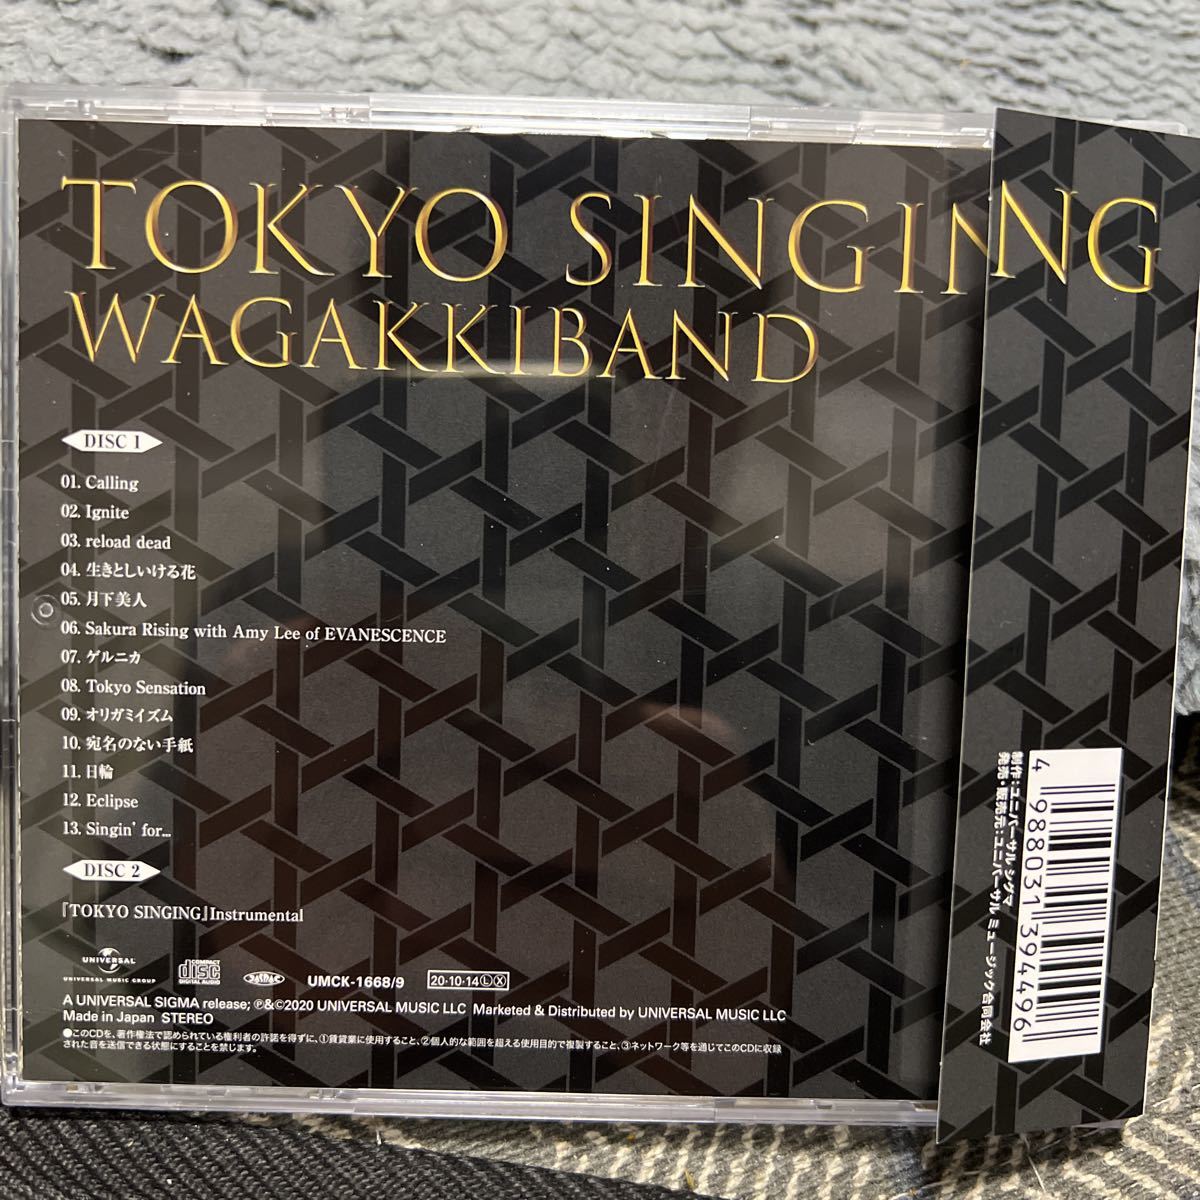 2CD 和楽器バンド/ WAGAKKIBAND TOKYO SINGING UMCK-1668/9_画像2